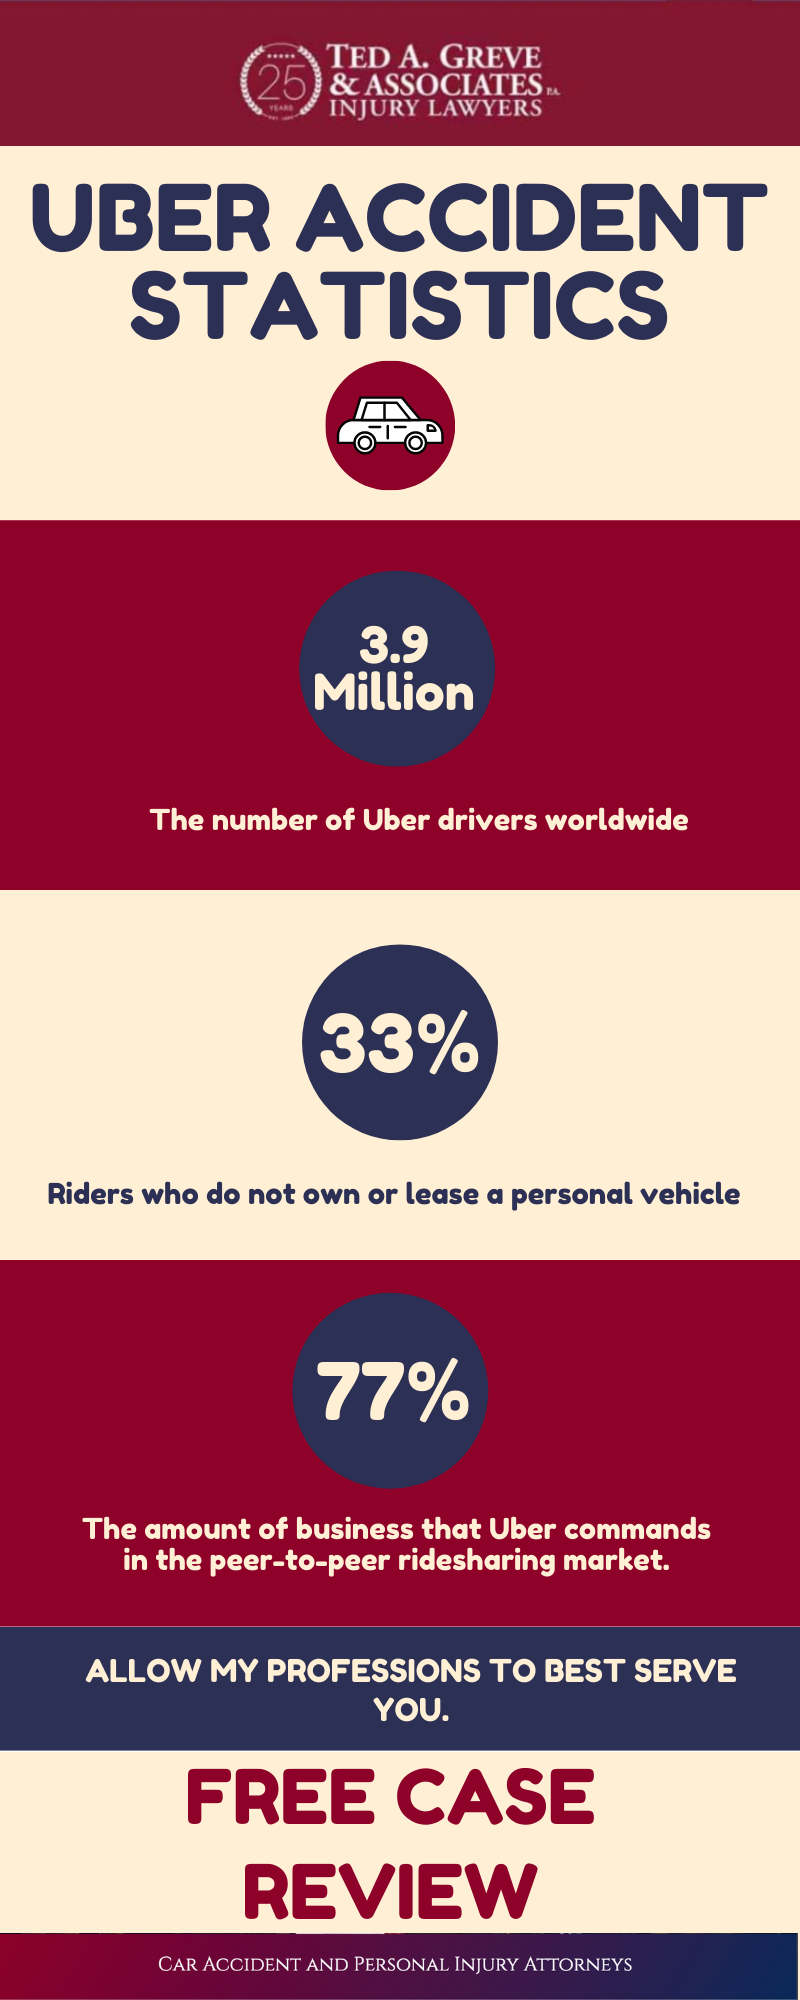 Ted Greve Charlotte Uber Accident Infographic